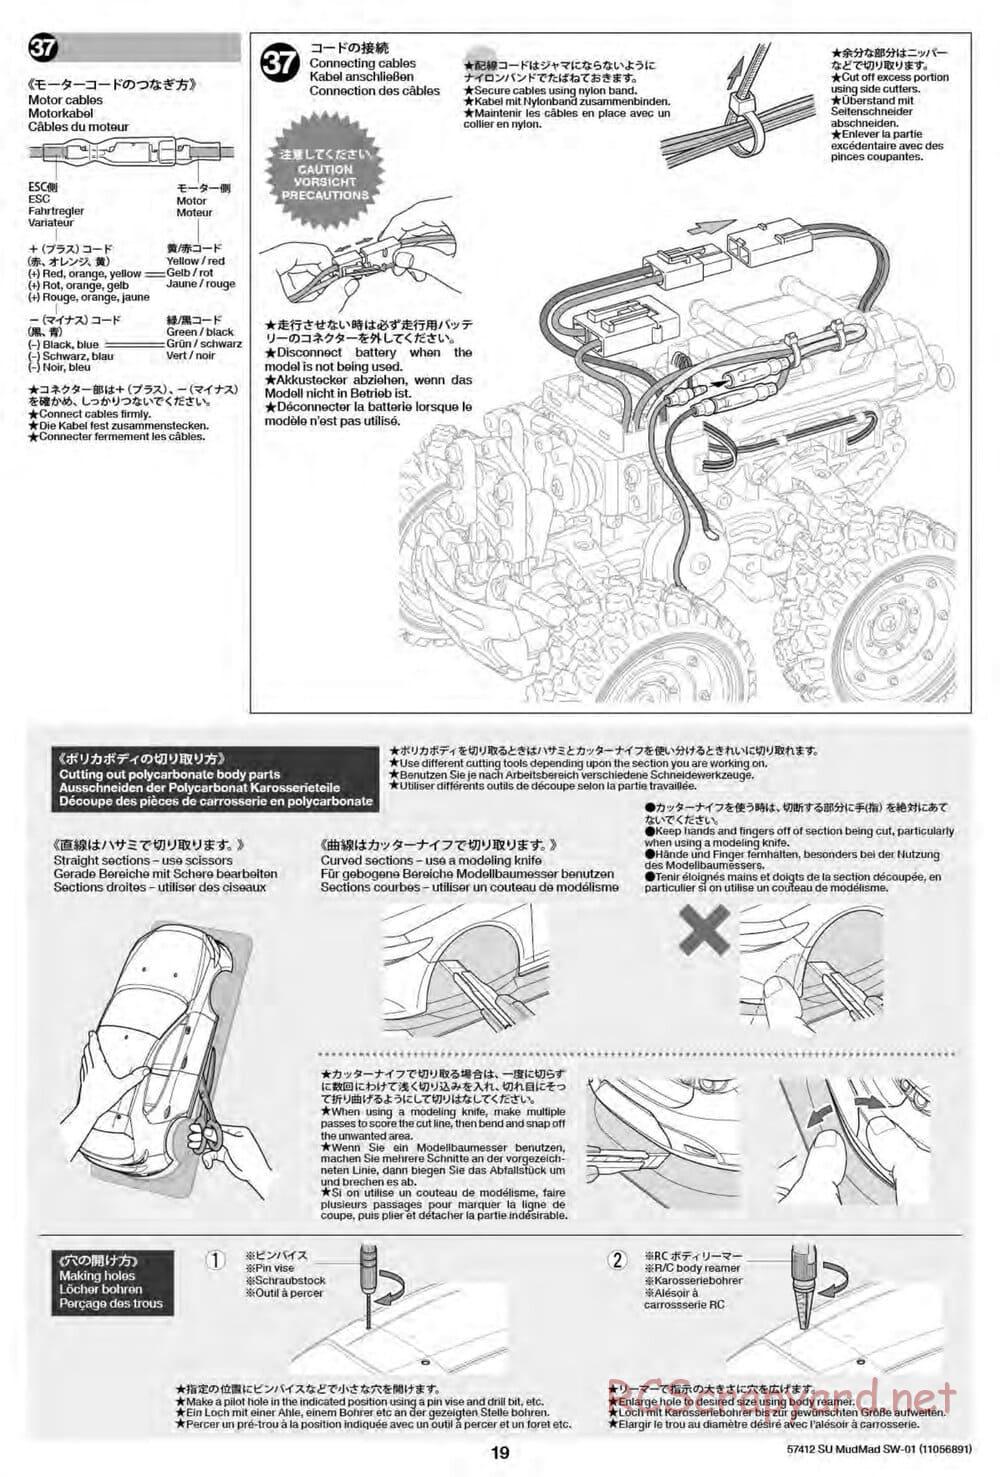 Tamiya - MudMad - SW-01 Chassis - Manual - Page 19